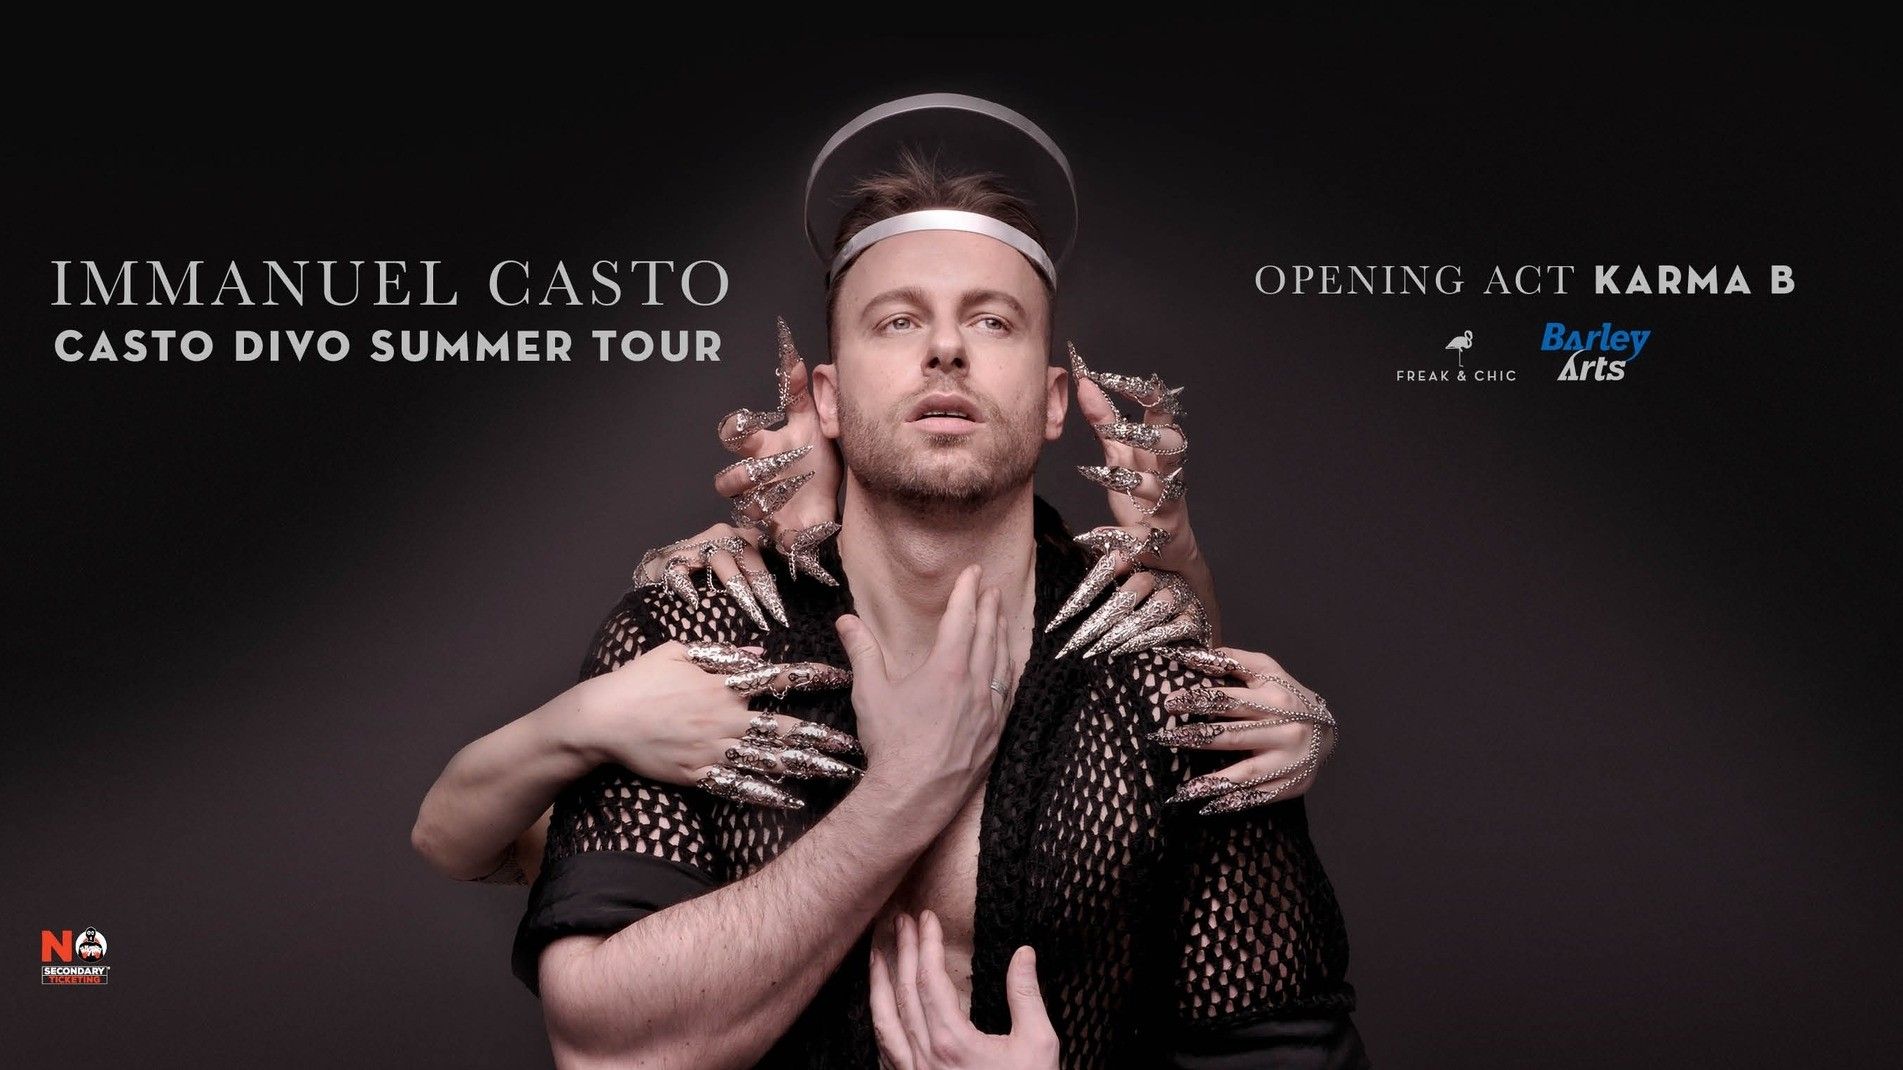 Immanuel Casto "Casto Divo Summer Tour"